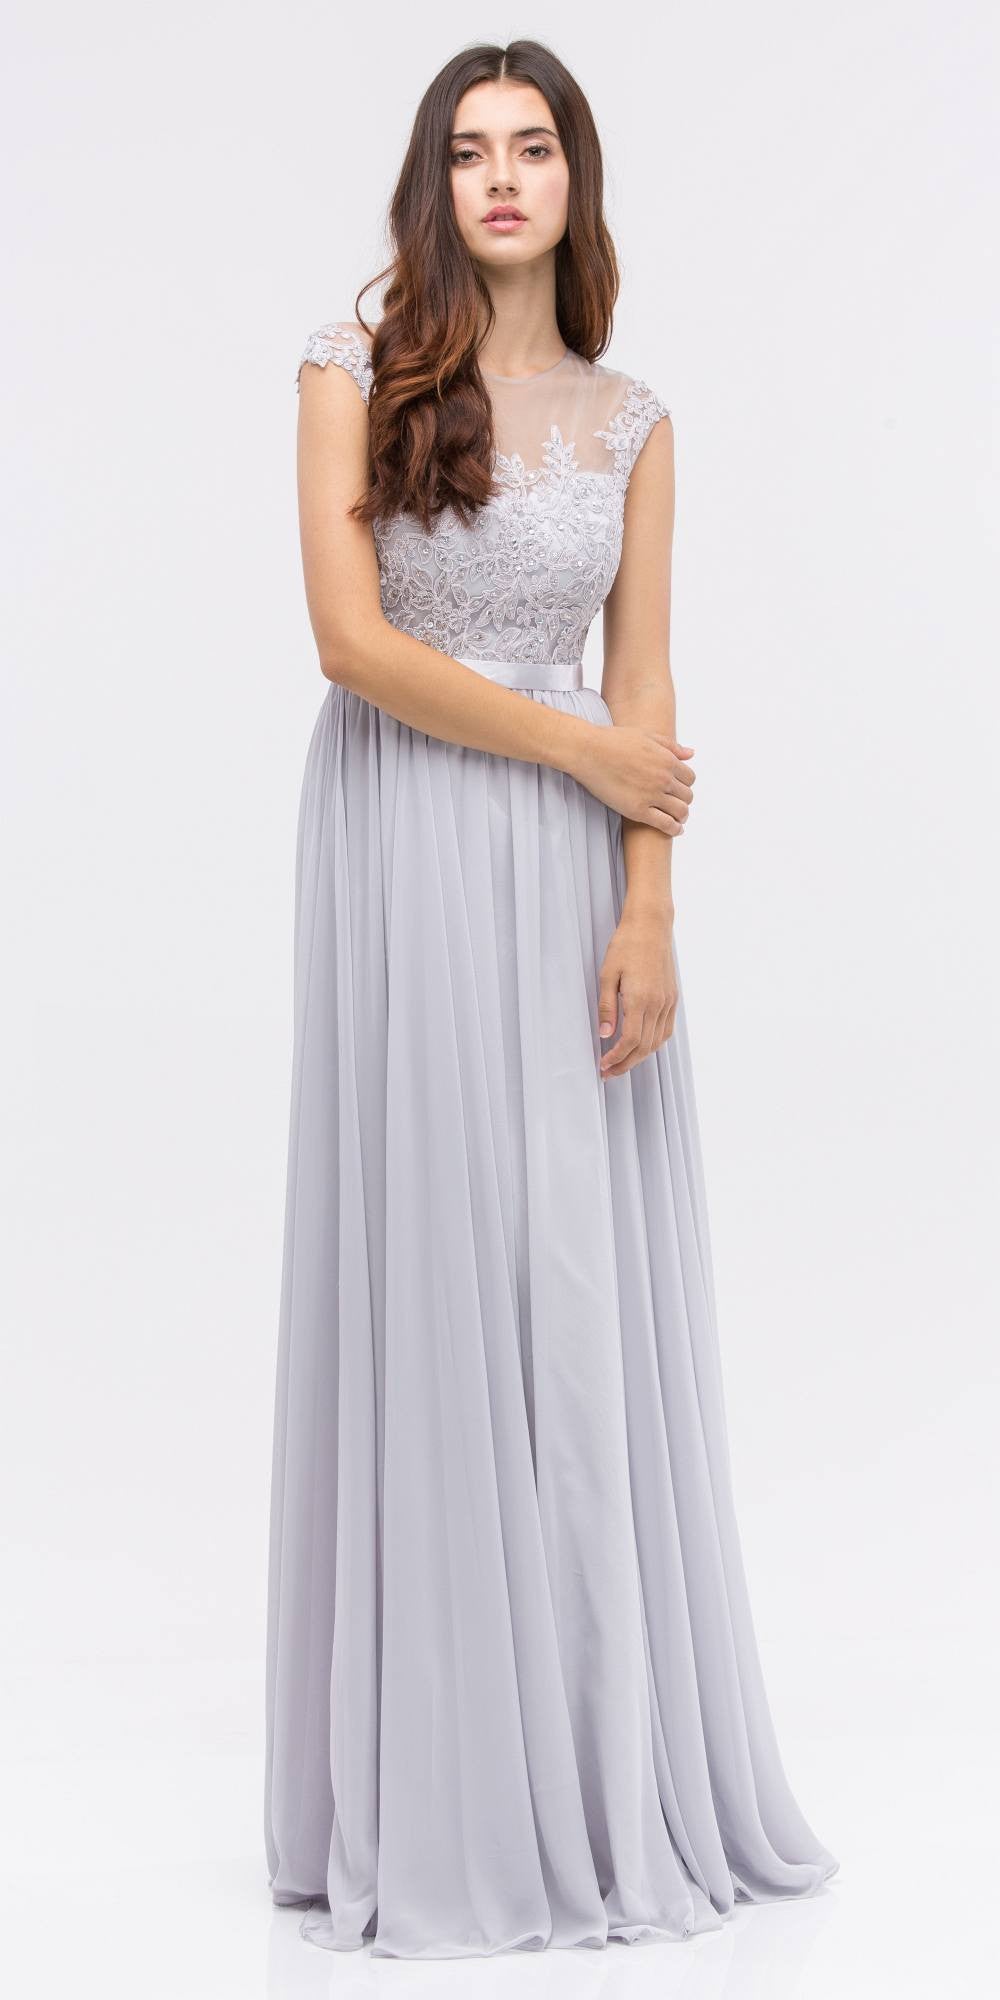 Lace Illusion Bodice Bateau Neck A-line Long Dress Silver